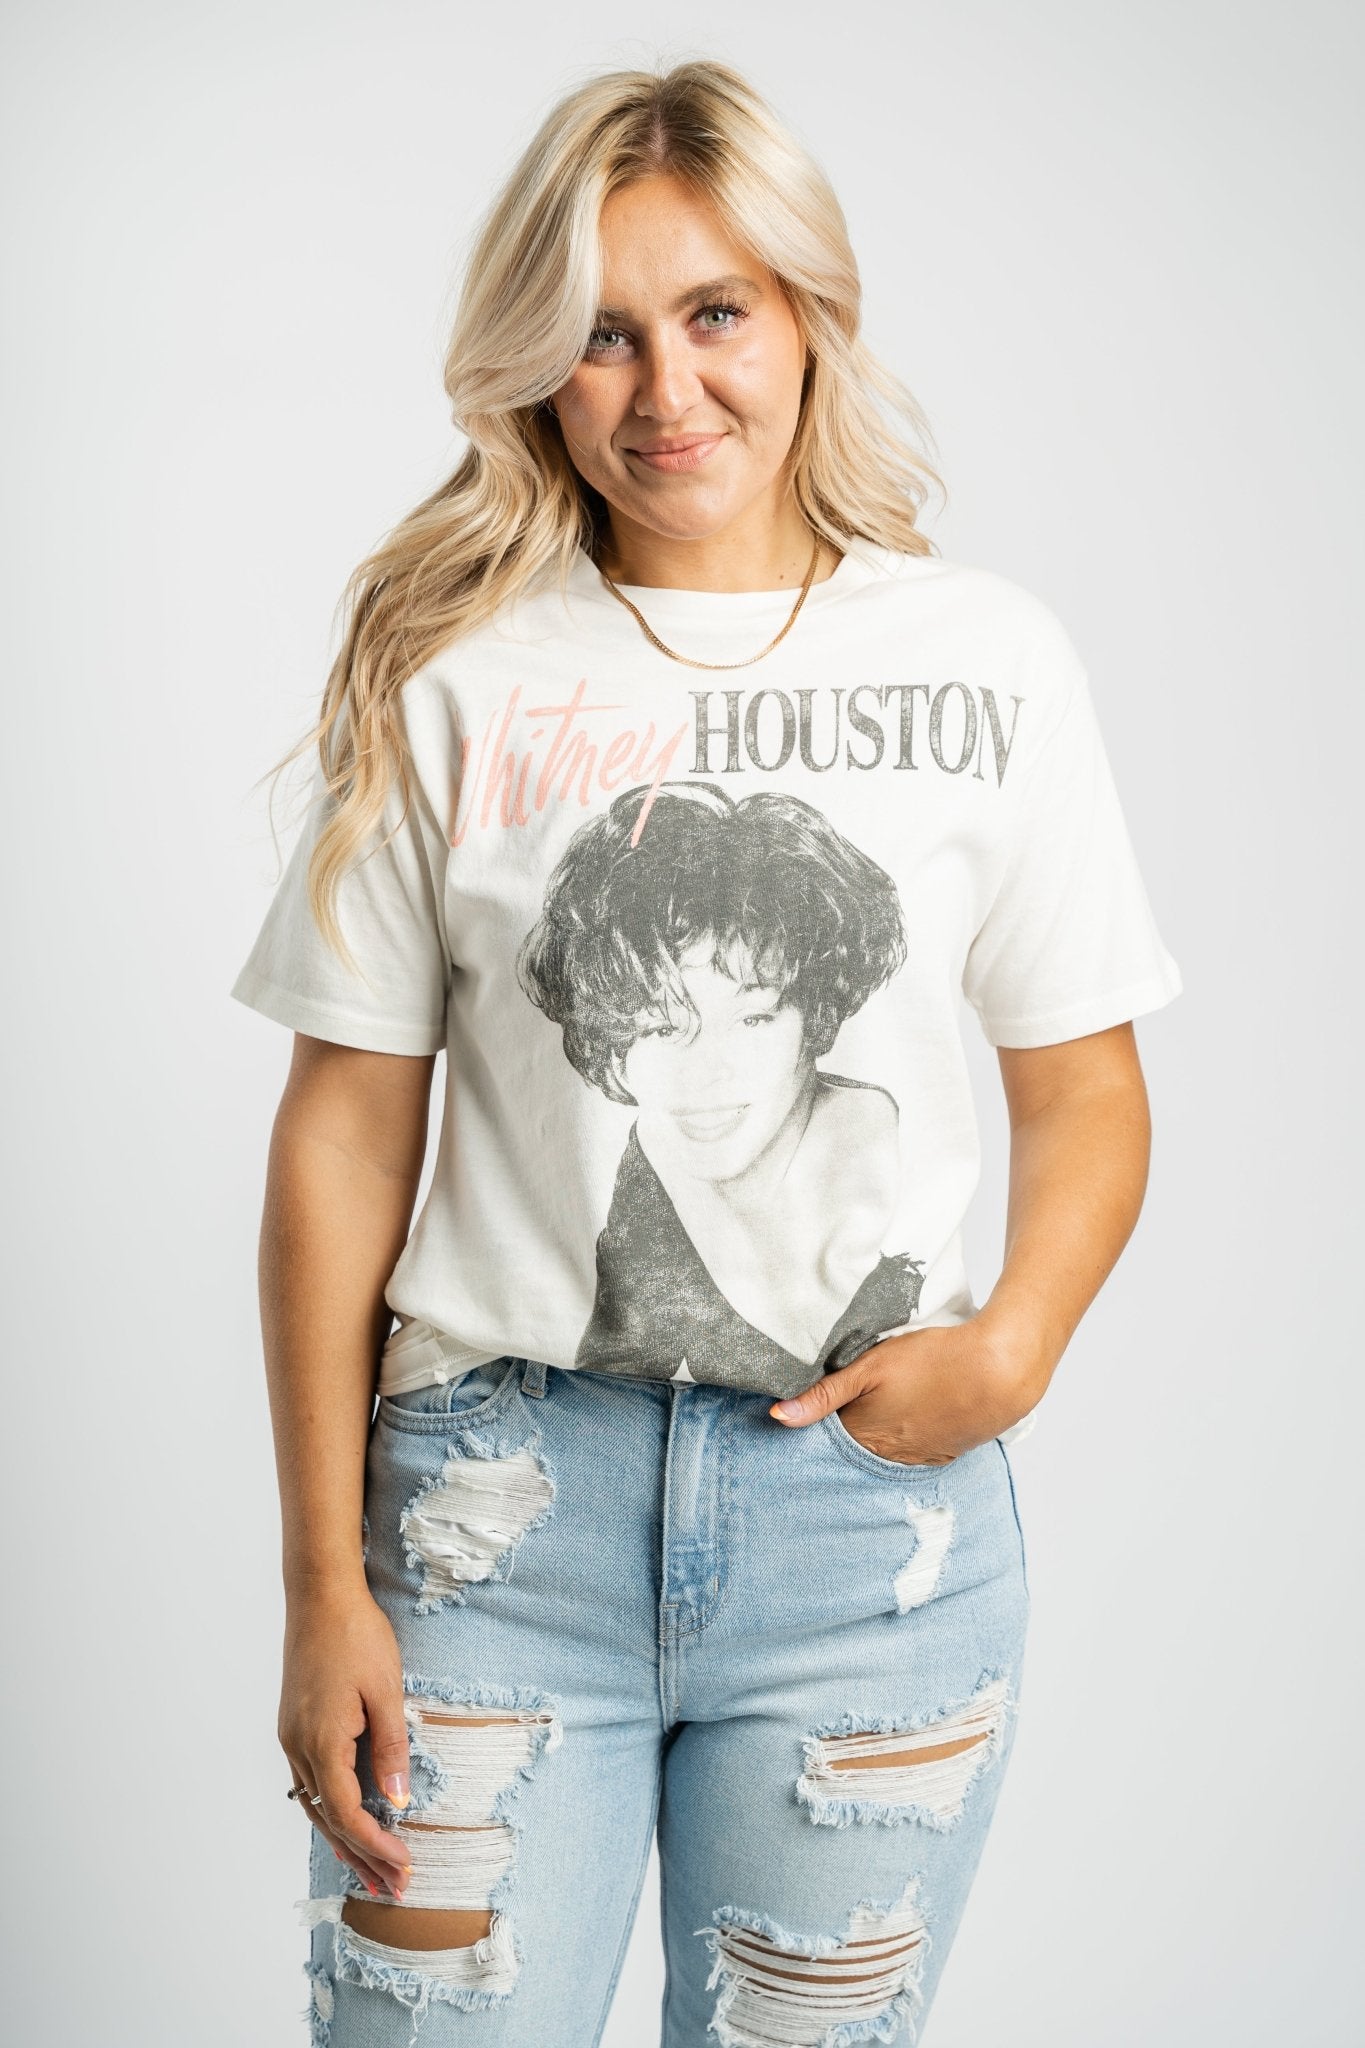 DayDreamer Whitney Houston fan club weekend tee - Stylish Band T-Shirts and Sweatshirts at Lush Fashion Lounge Boutique in Oklahoma City